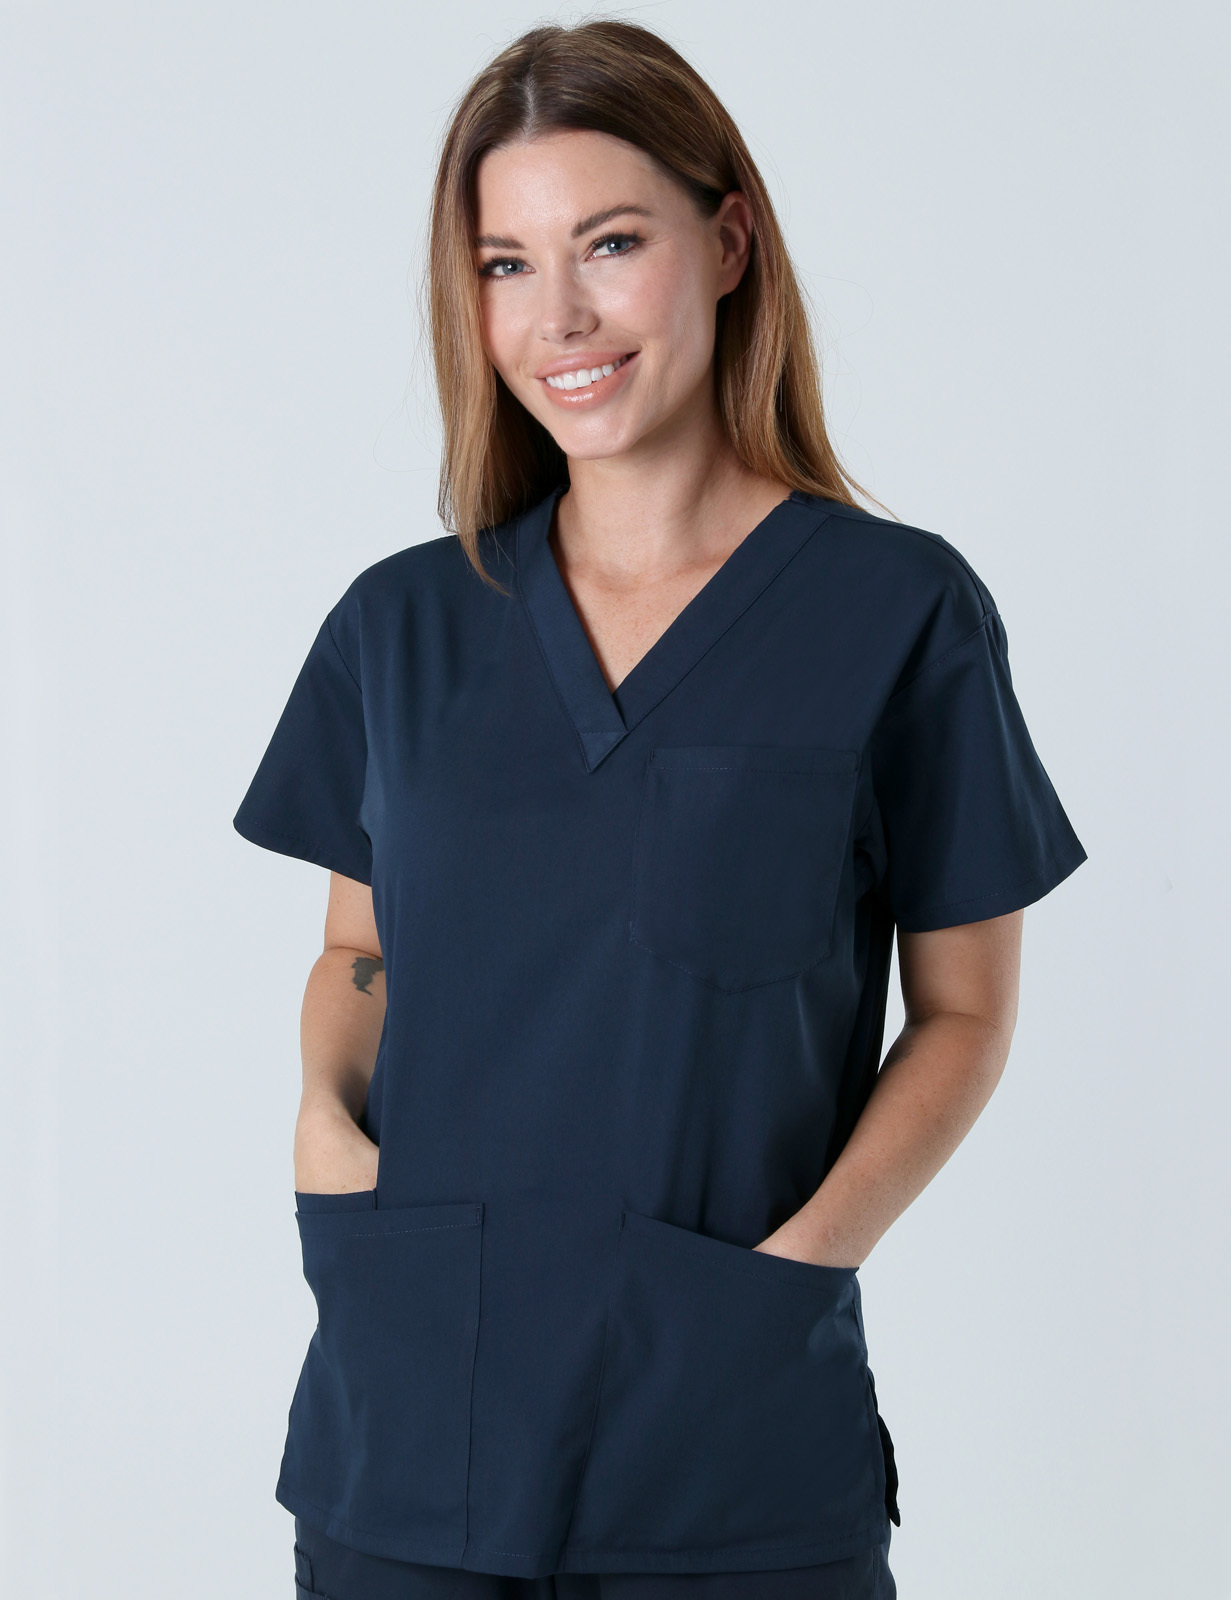 Northern Health - ED Nurse (4 Pocket Scrub Top and Cargo Pants in Navy incl Logos)